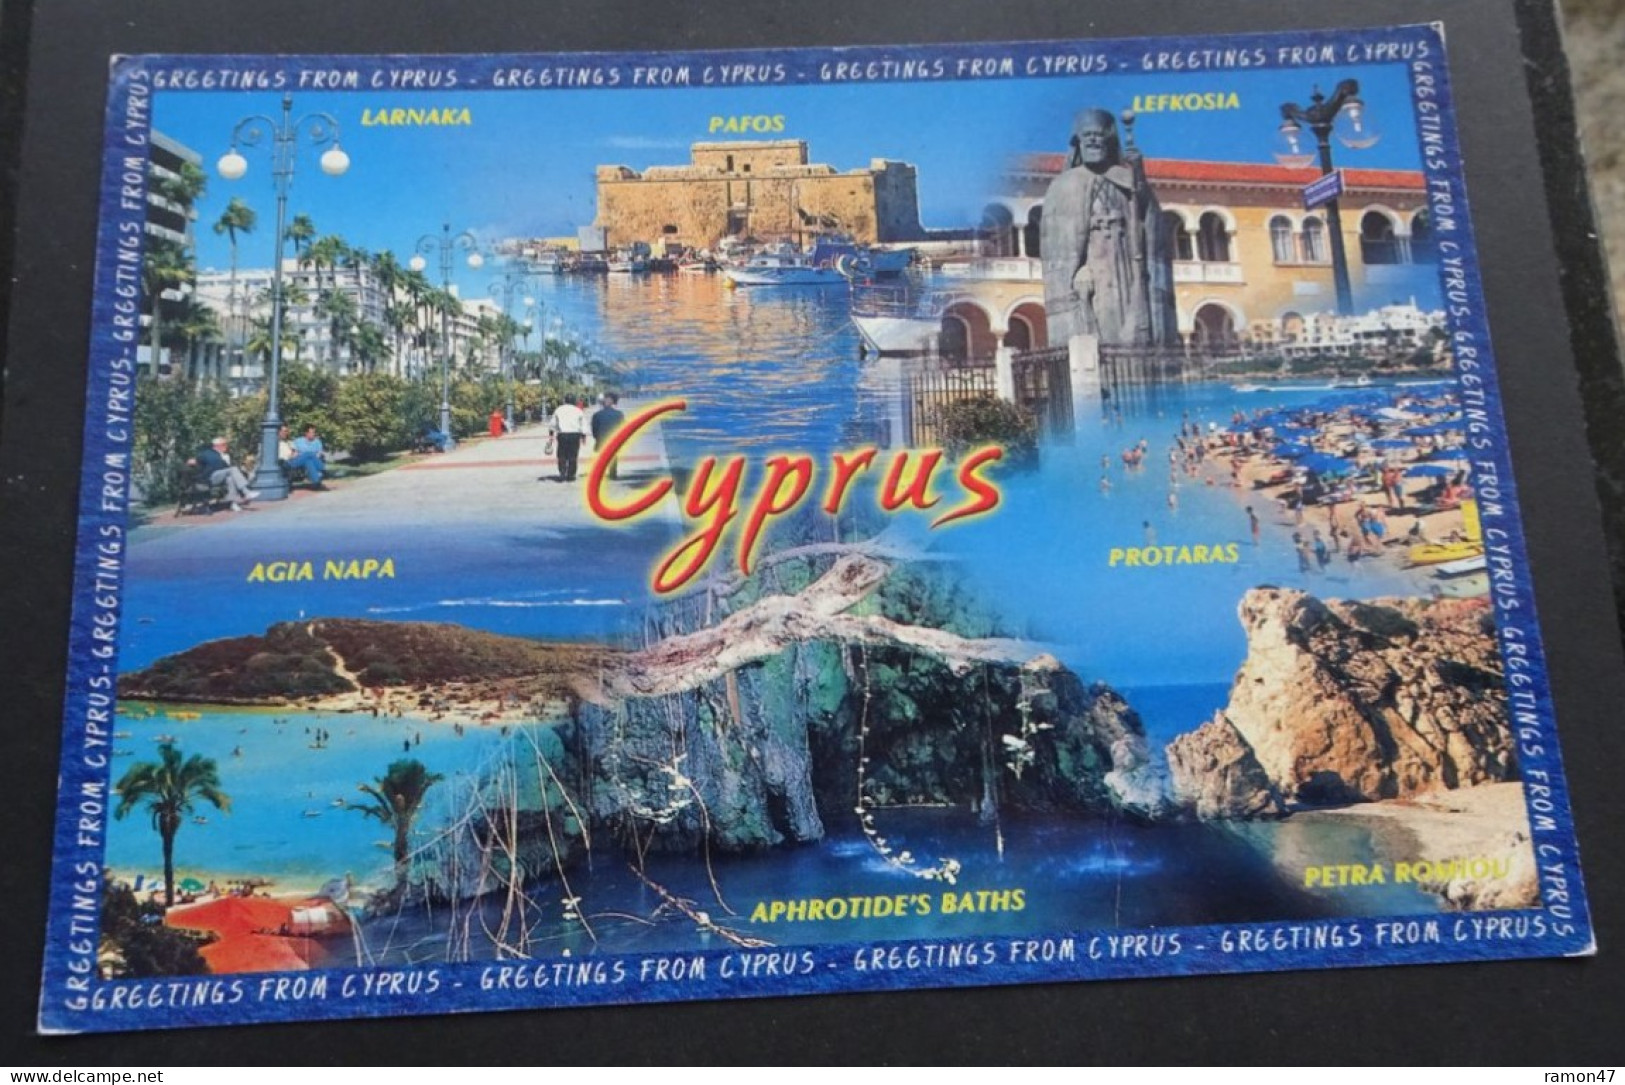 Cyprus - Editions Zevlaris, Lefkosia - Photo Savvas Zevlaris - Cyprus